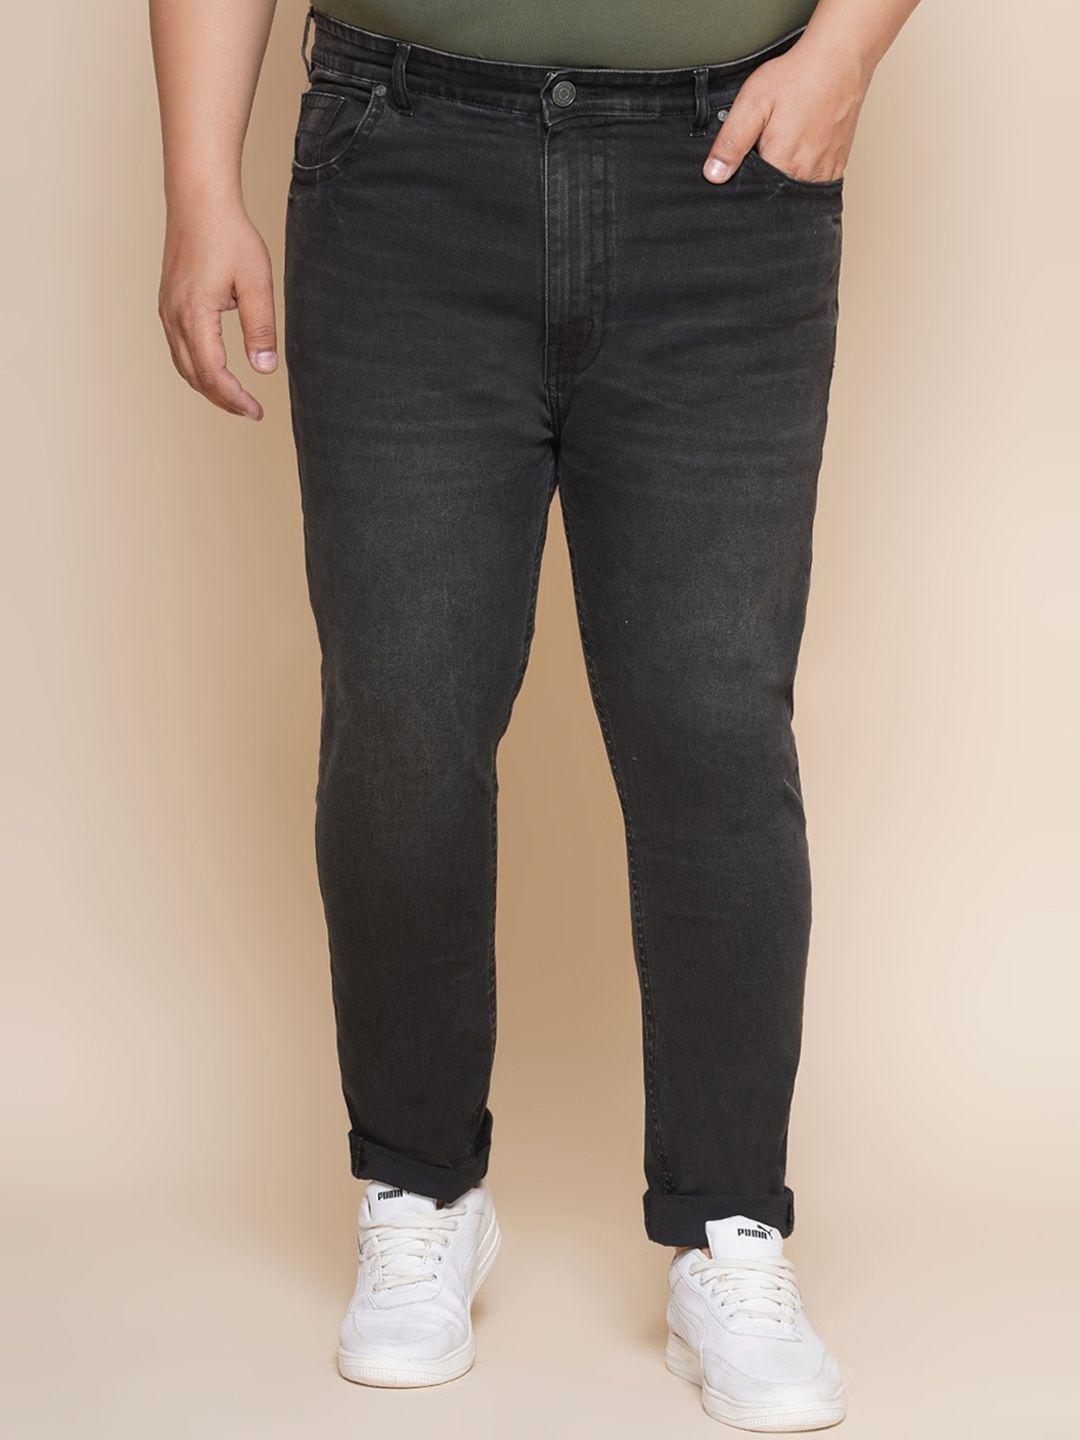 john-pride-plus-size-men-mid-rise-light-fade-stretchable-jeans